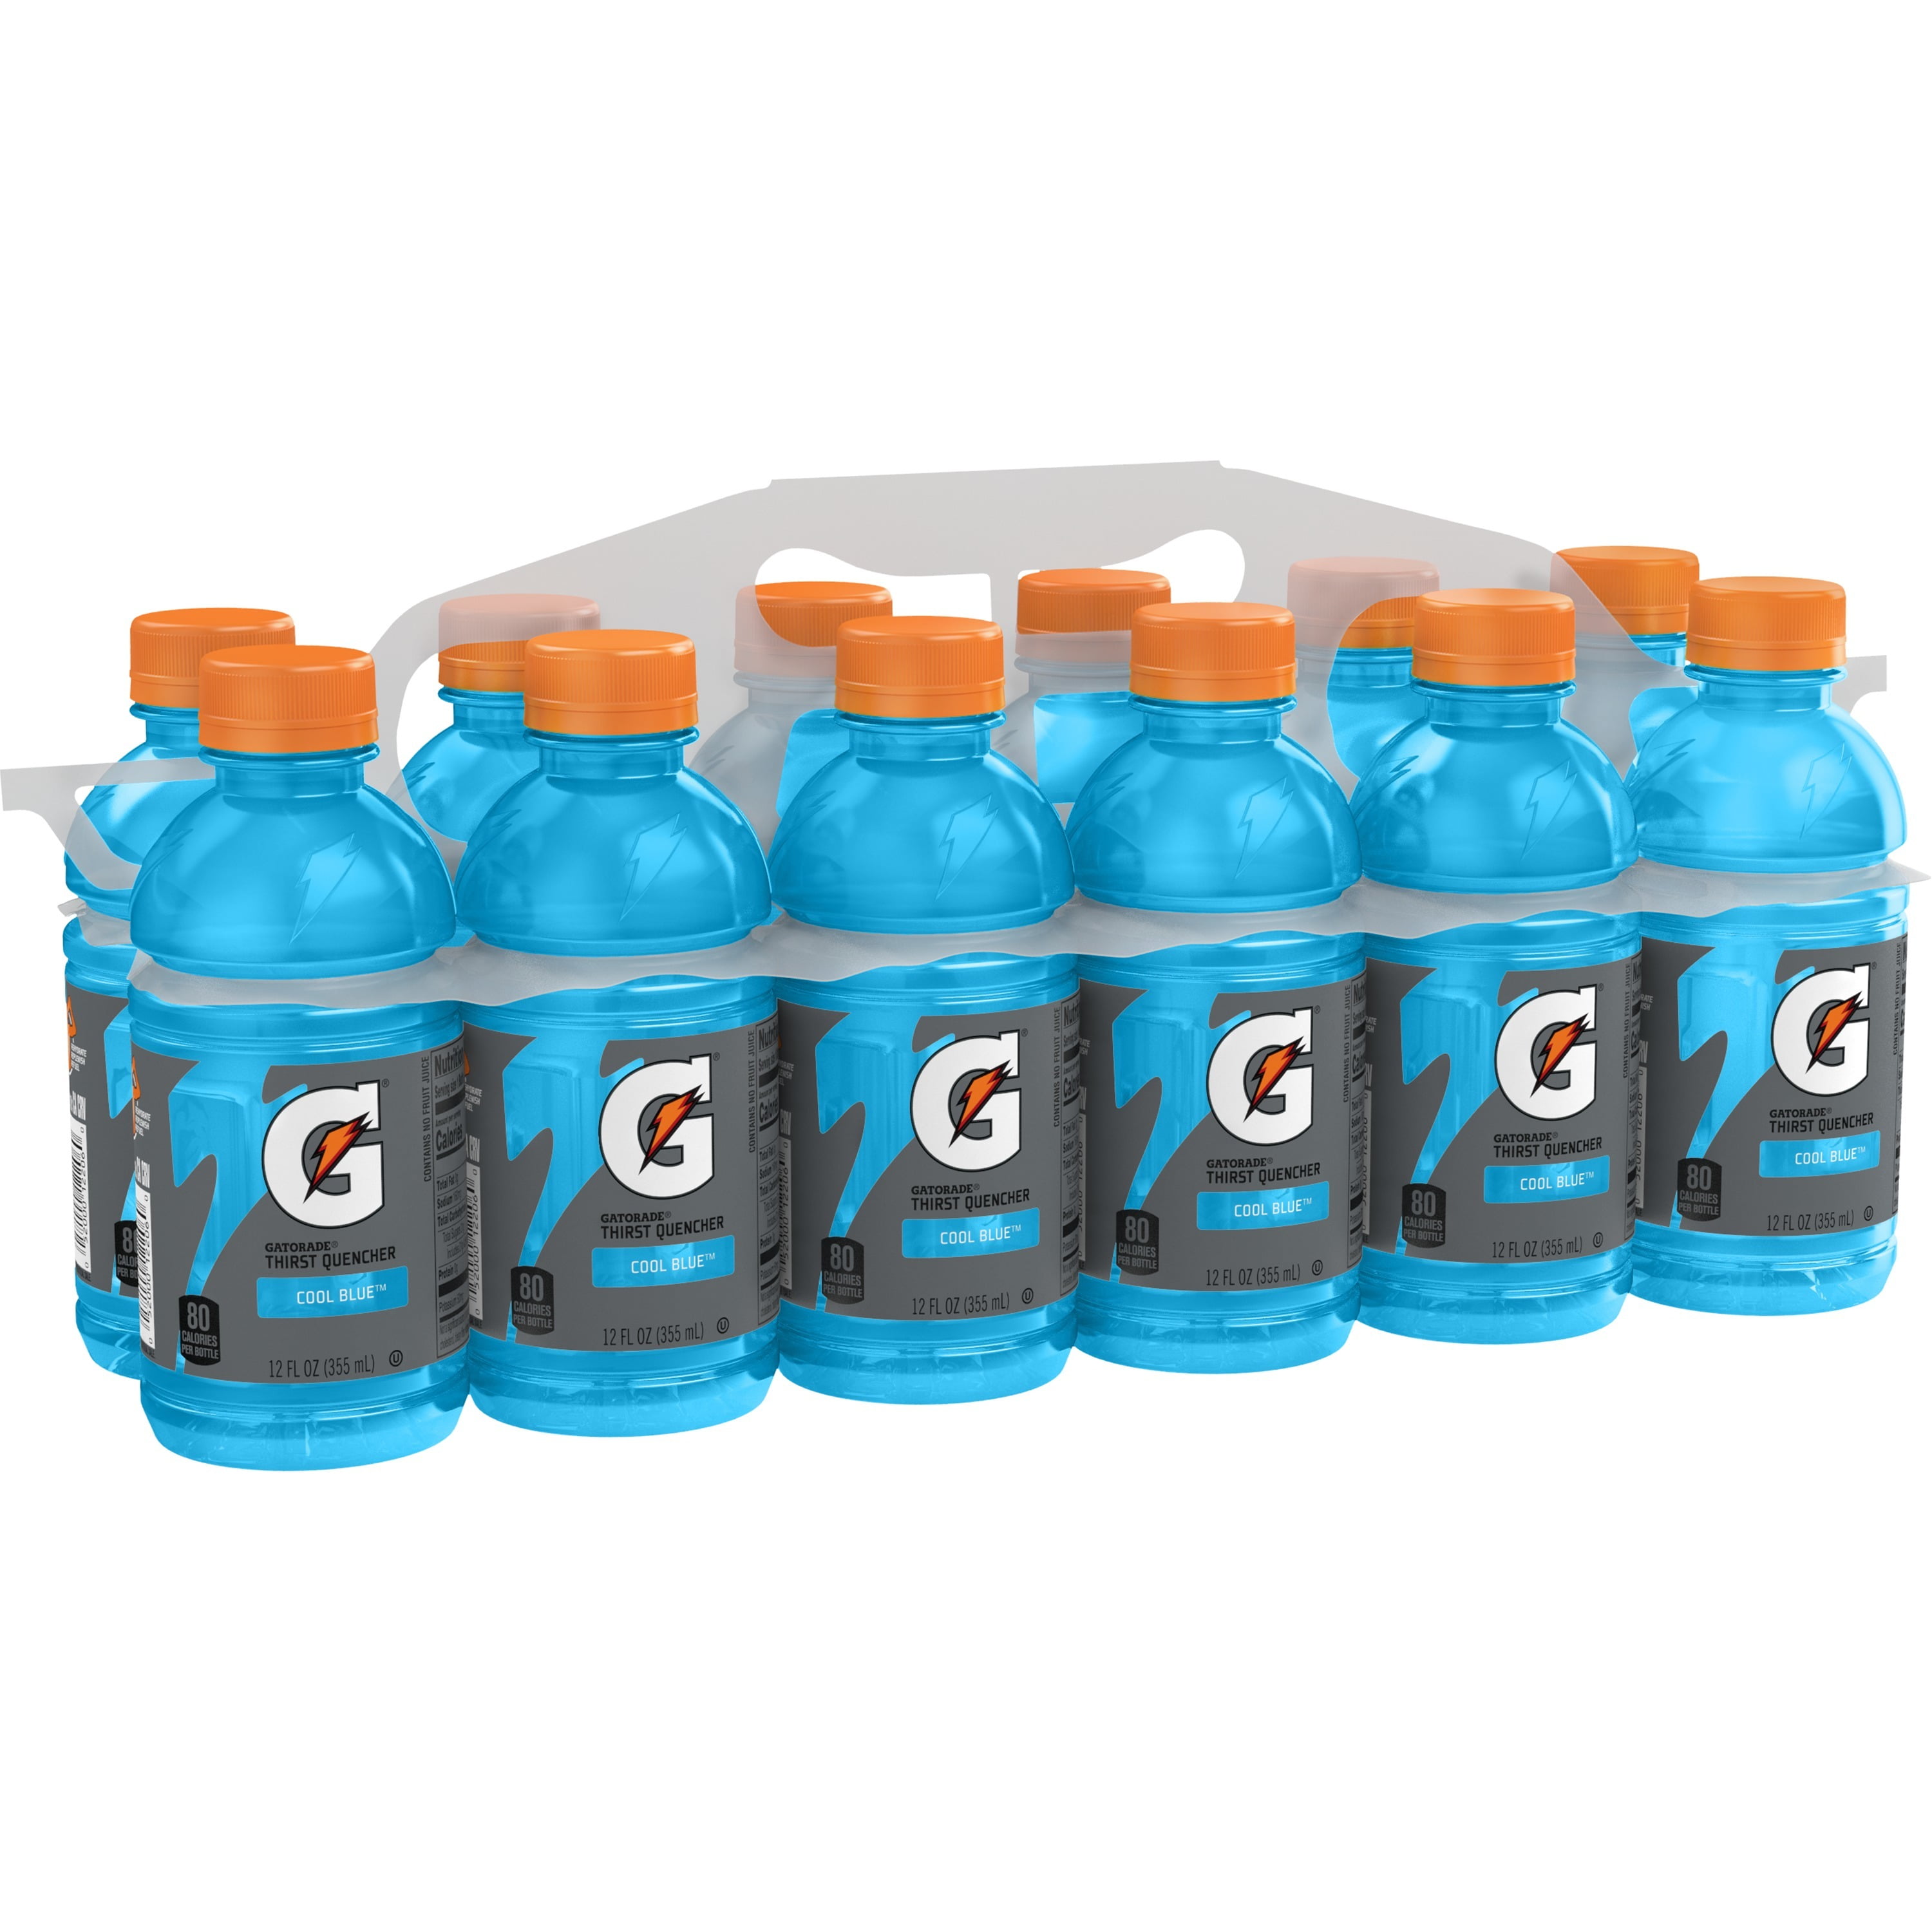 Gatorade Cool Blue Thirst Quencher Sports Drink, 12 oz, 12 Pack Bottles